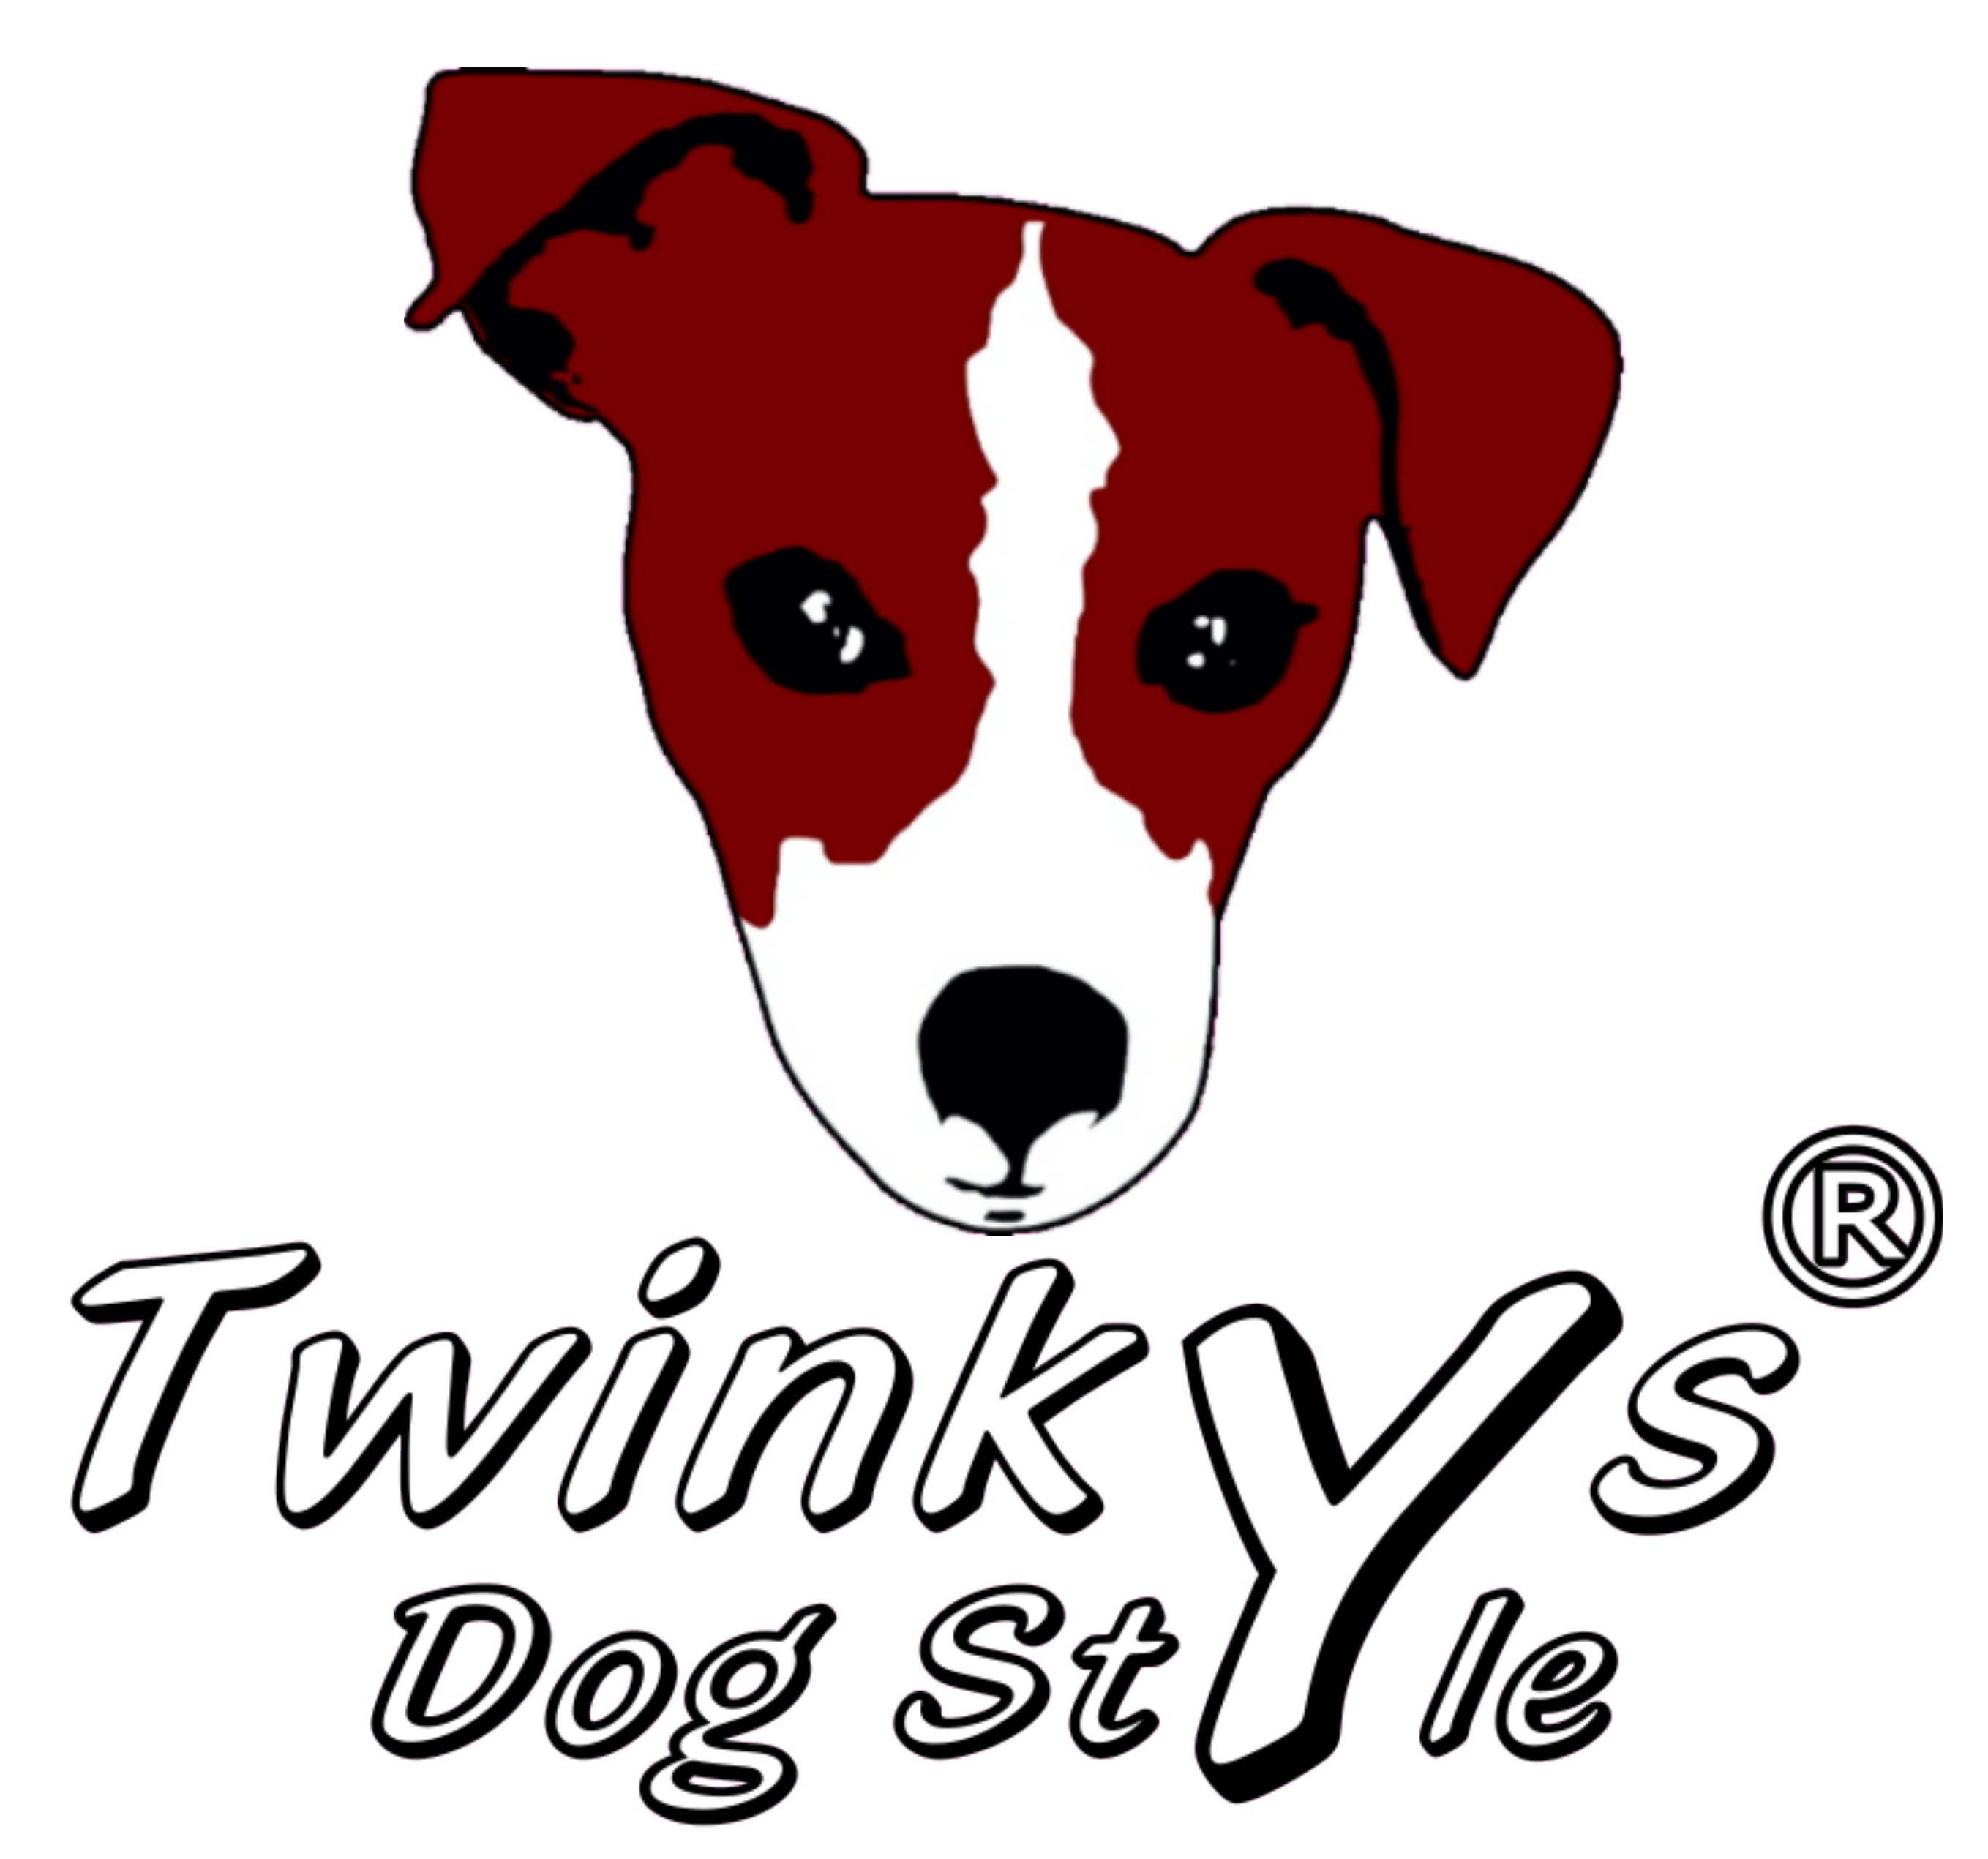 Twinkys Dog Style